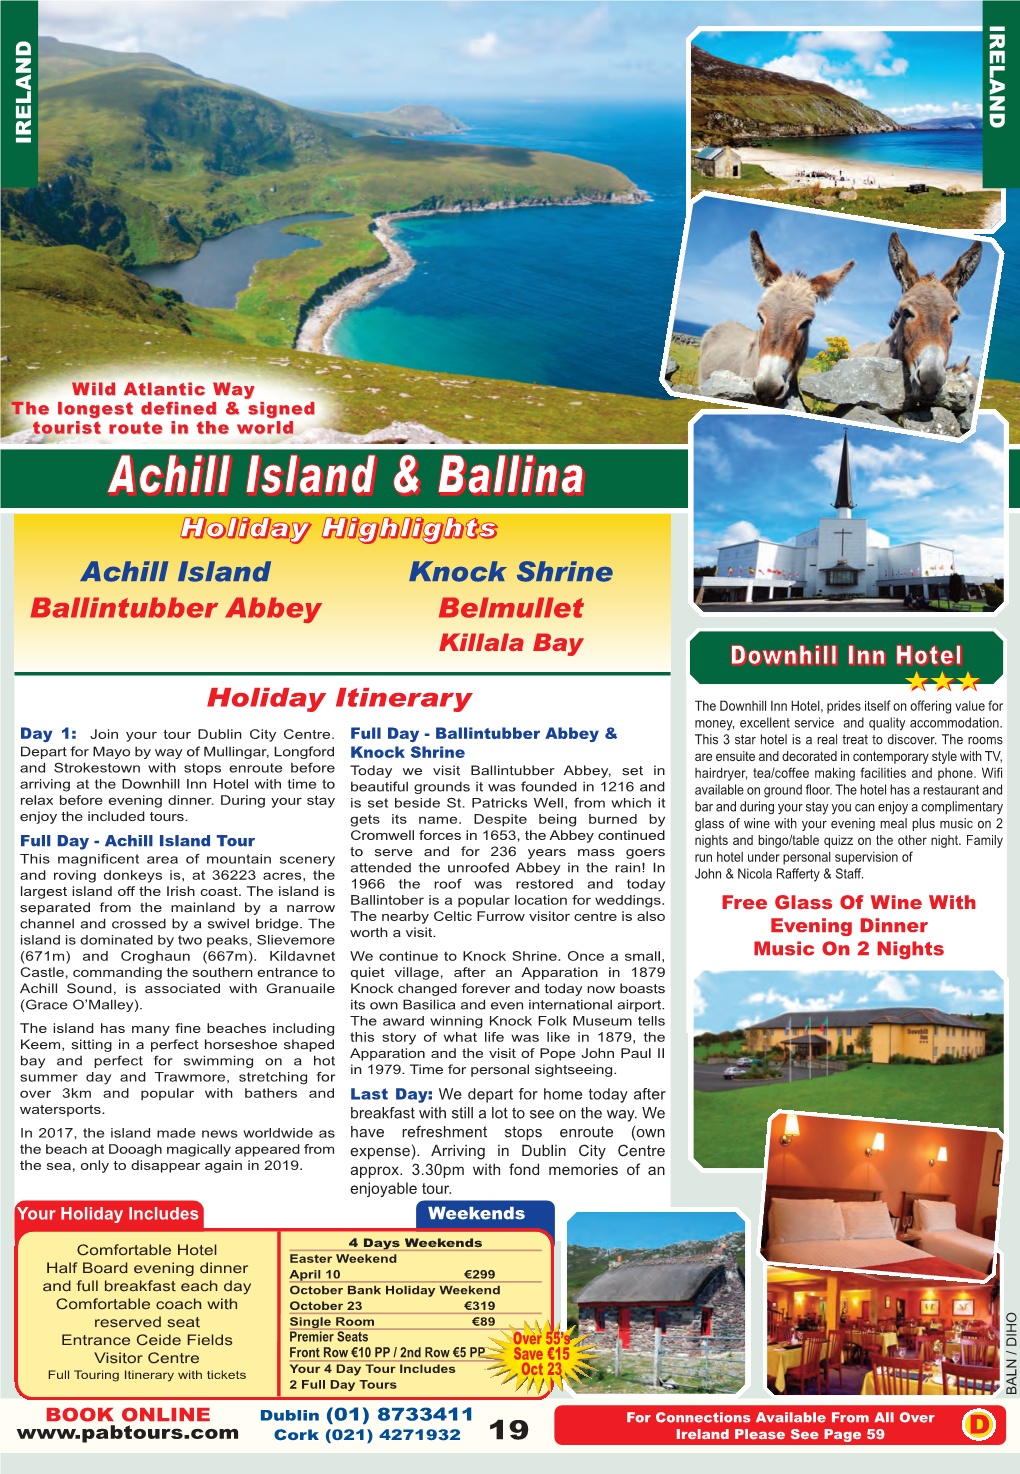 Achill Island & Ballina